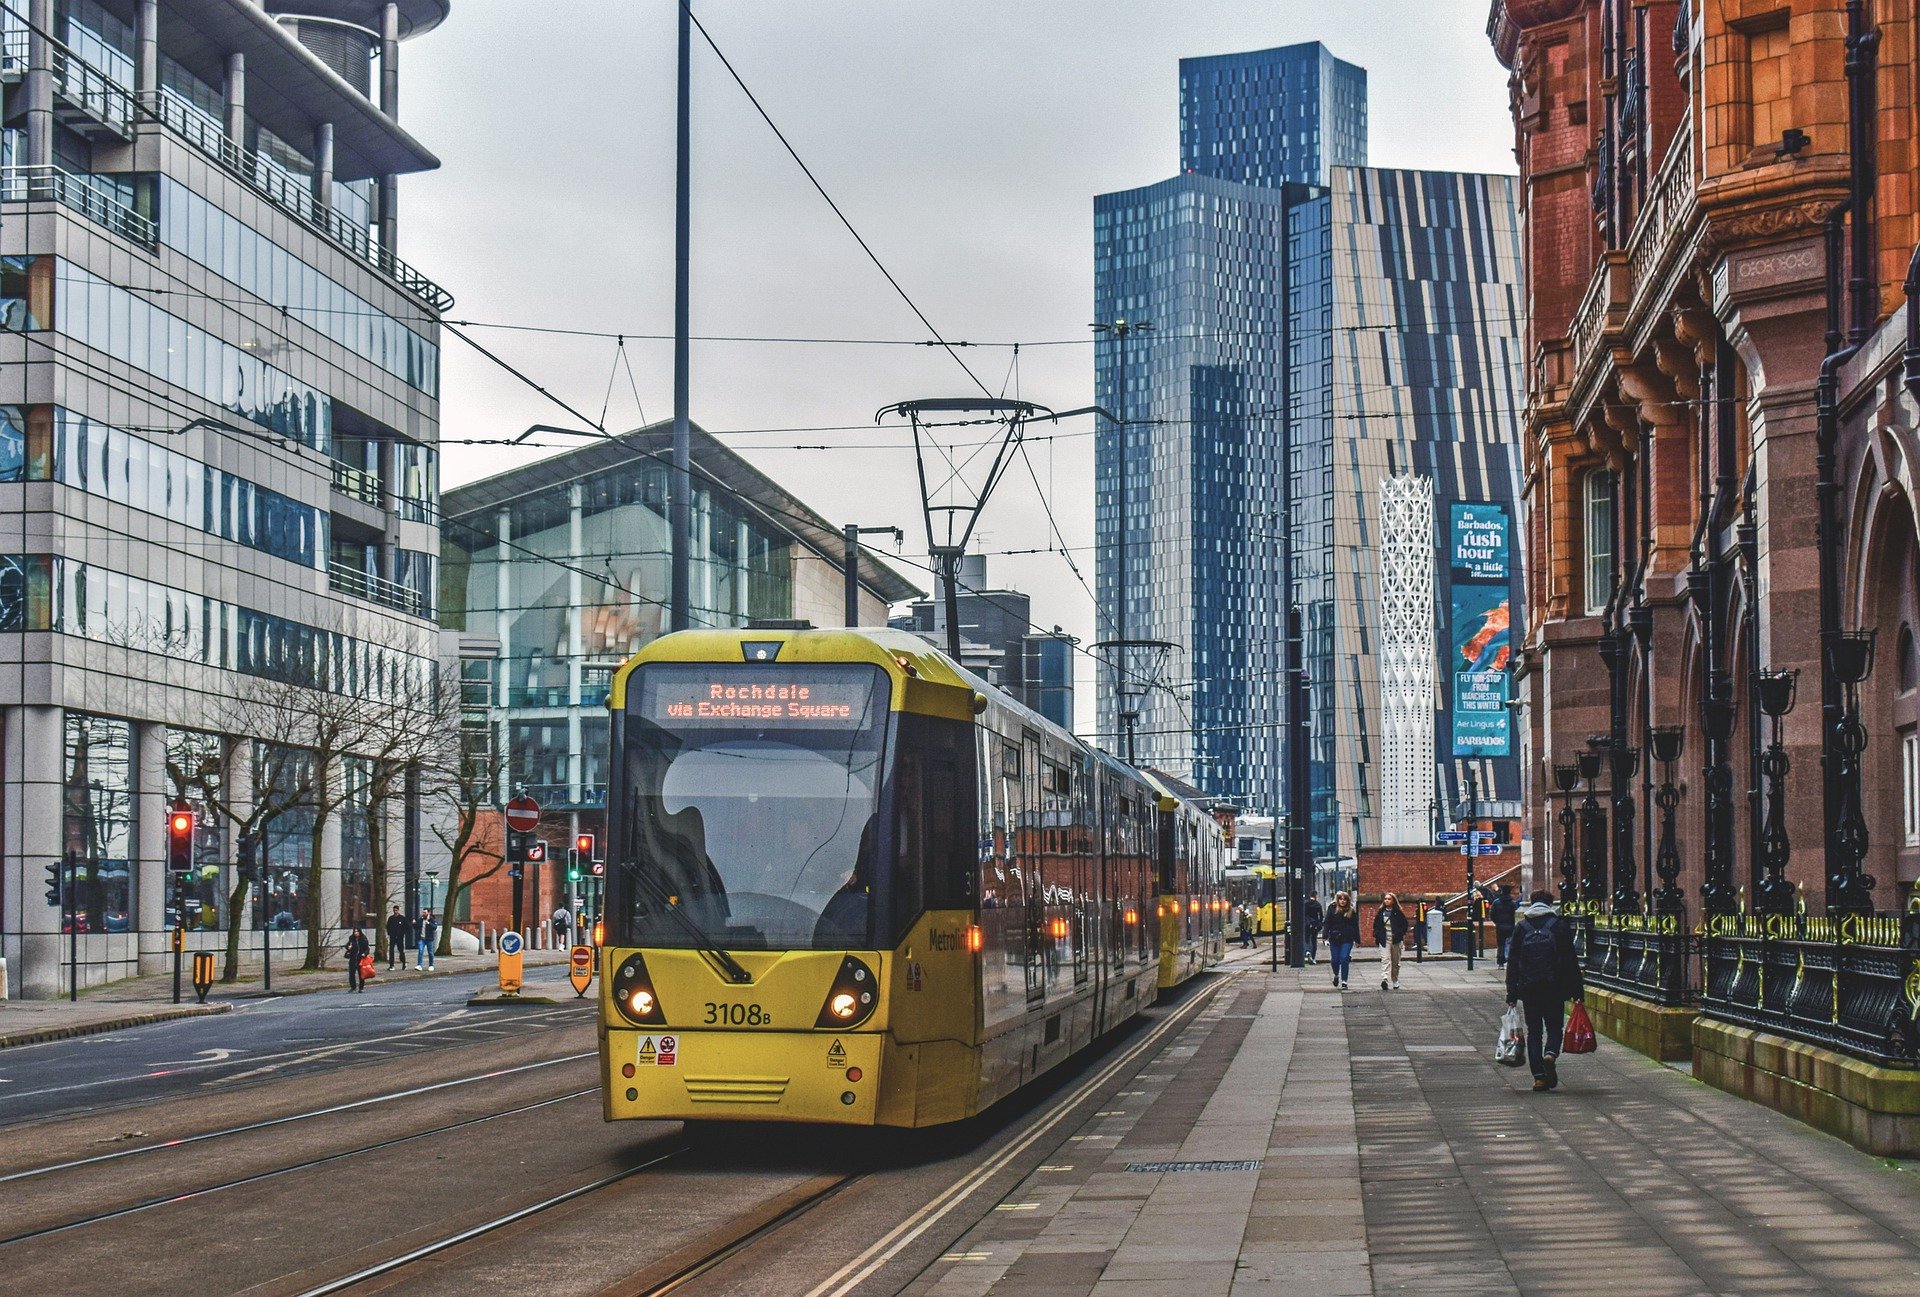 Tram / Metrolink in Manchester